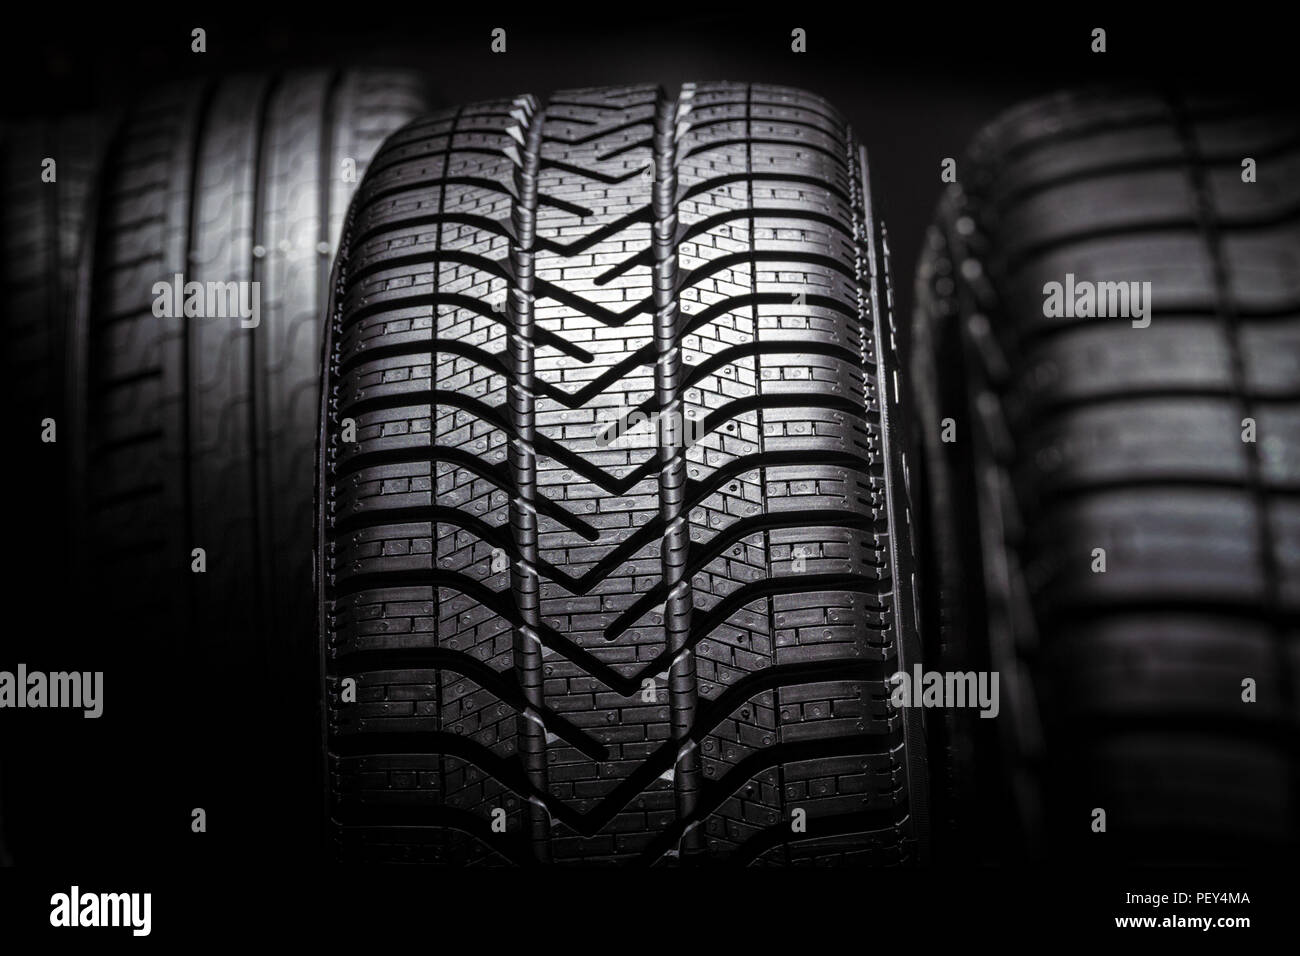 Row of car tires close up Stock Photo